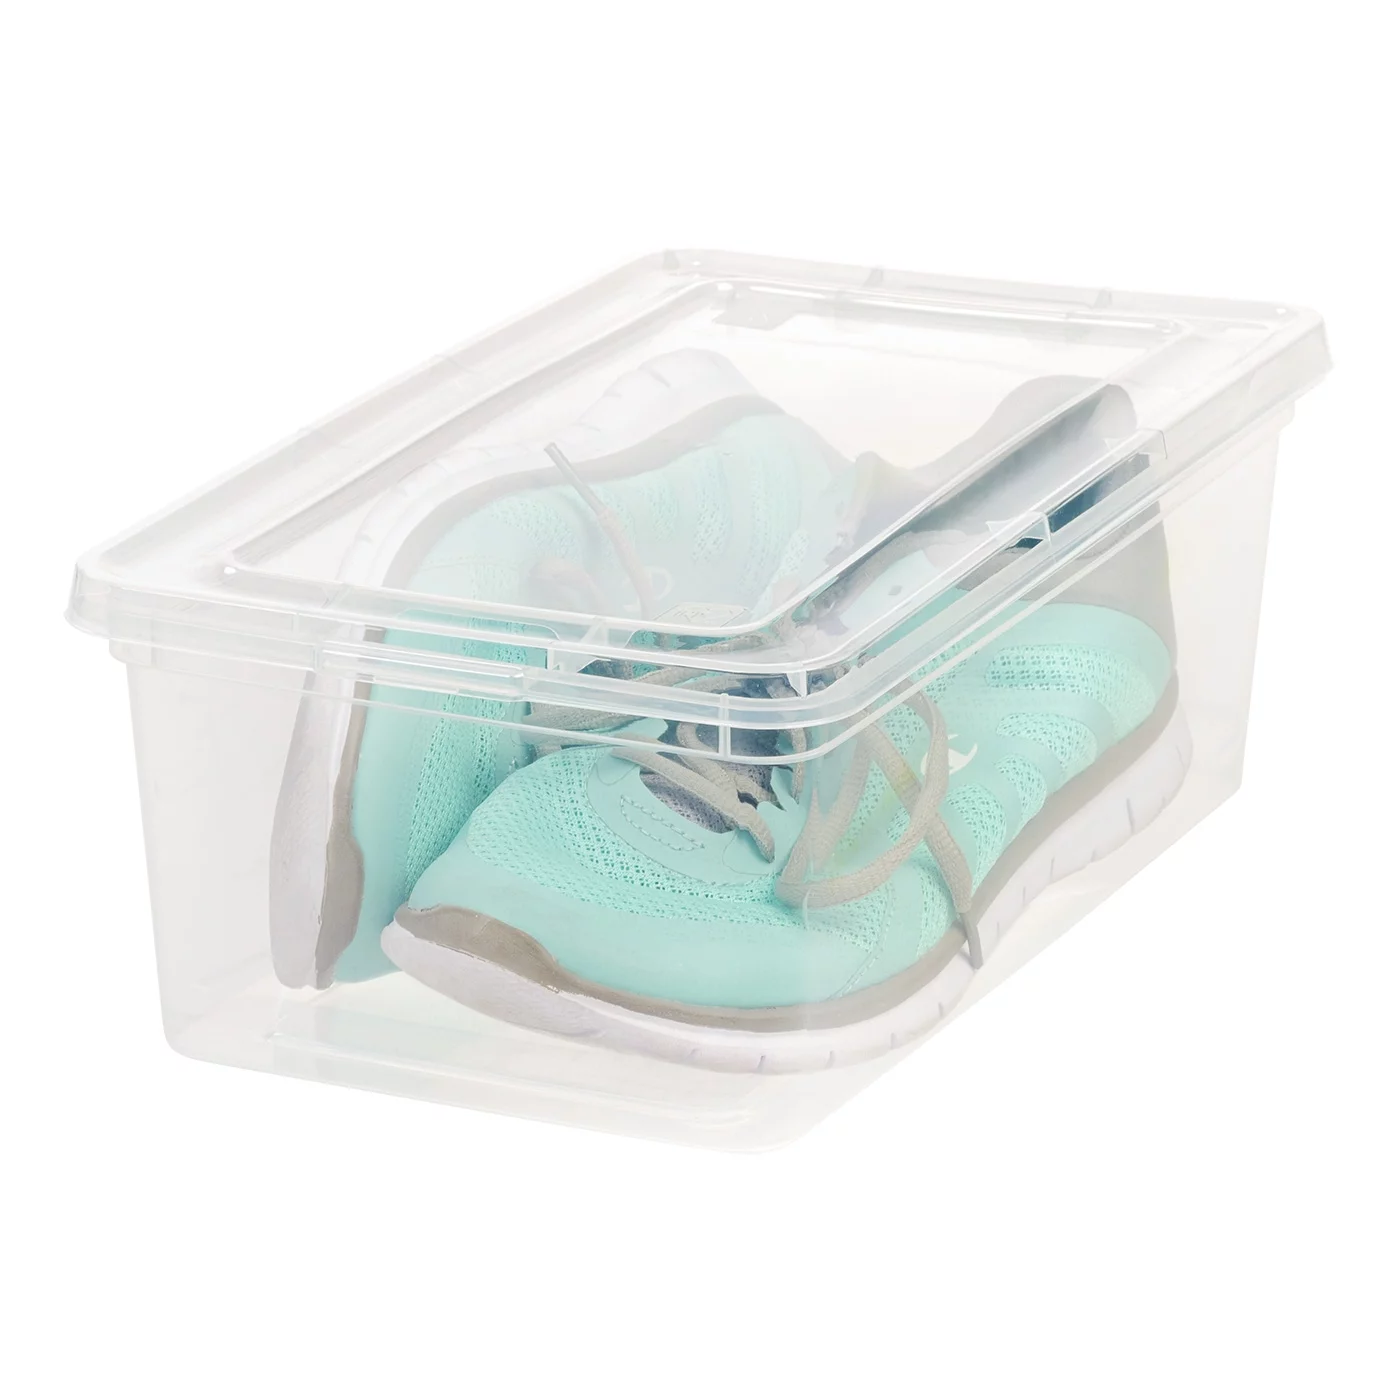 Mainstays 5 Quart Stackable Plastic Lidded Closet Organizer Box - Clear - Set of 20